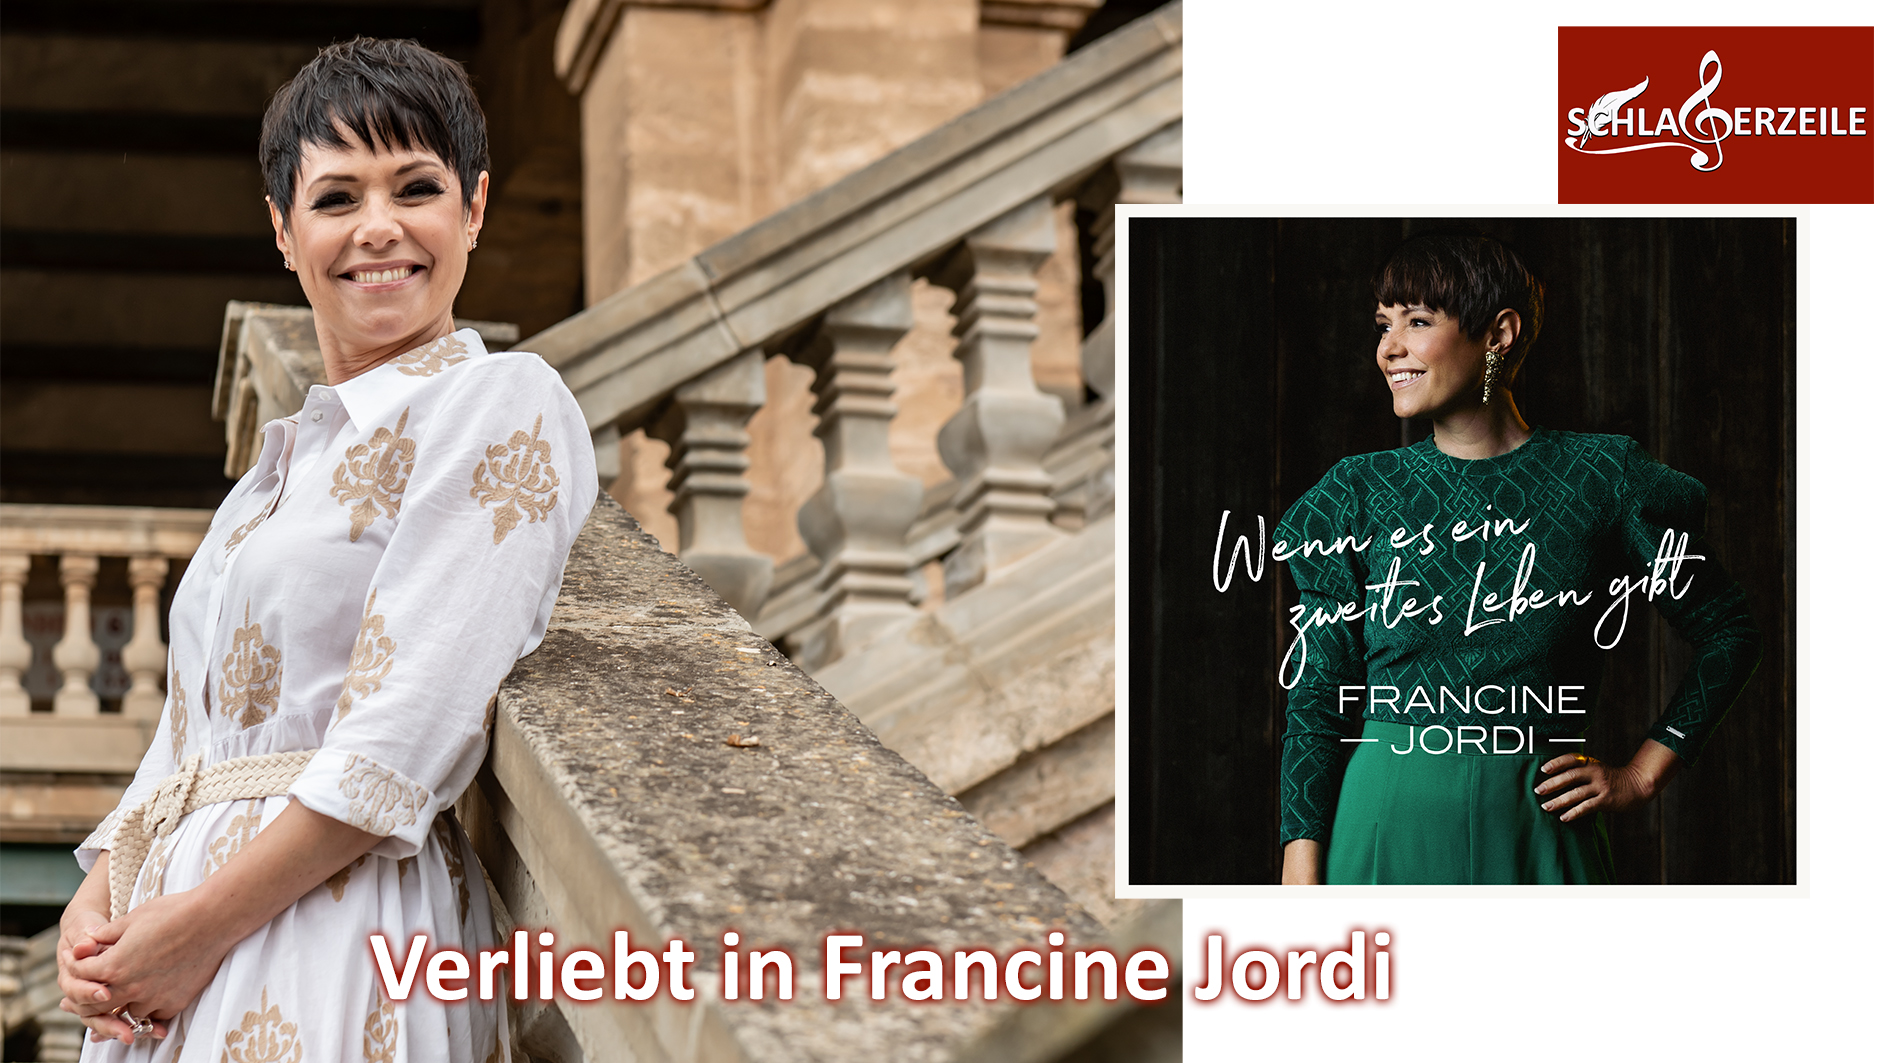 Francine Jordi zweites Leben